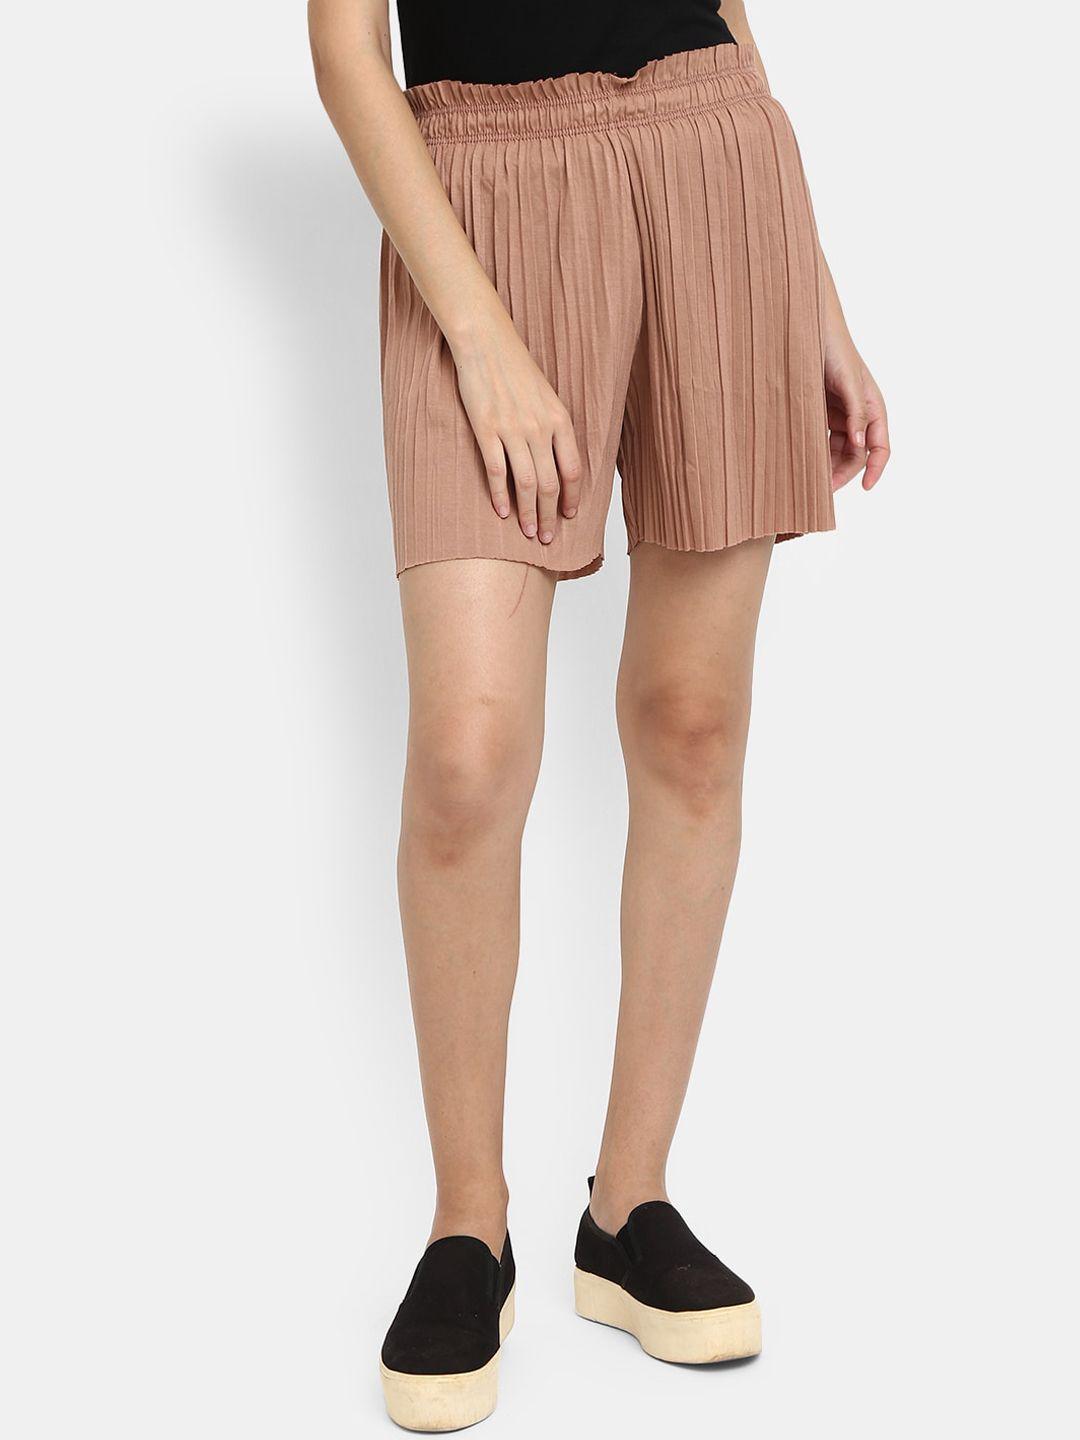 v-mart women mid-rise pleated cotton shorts